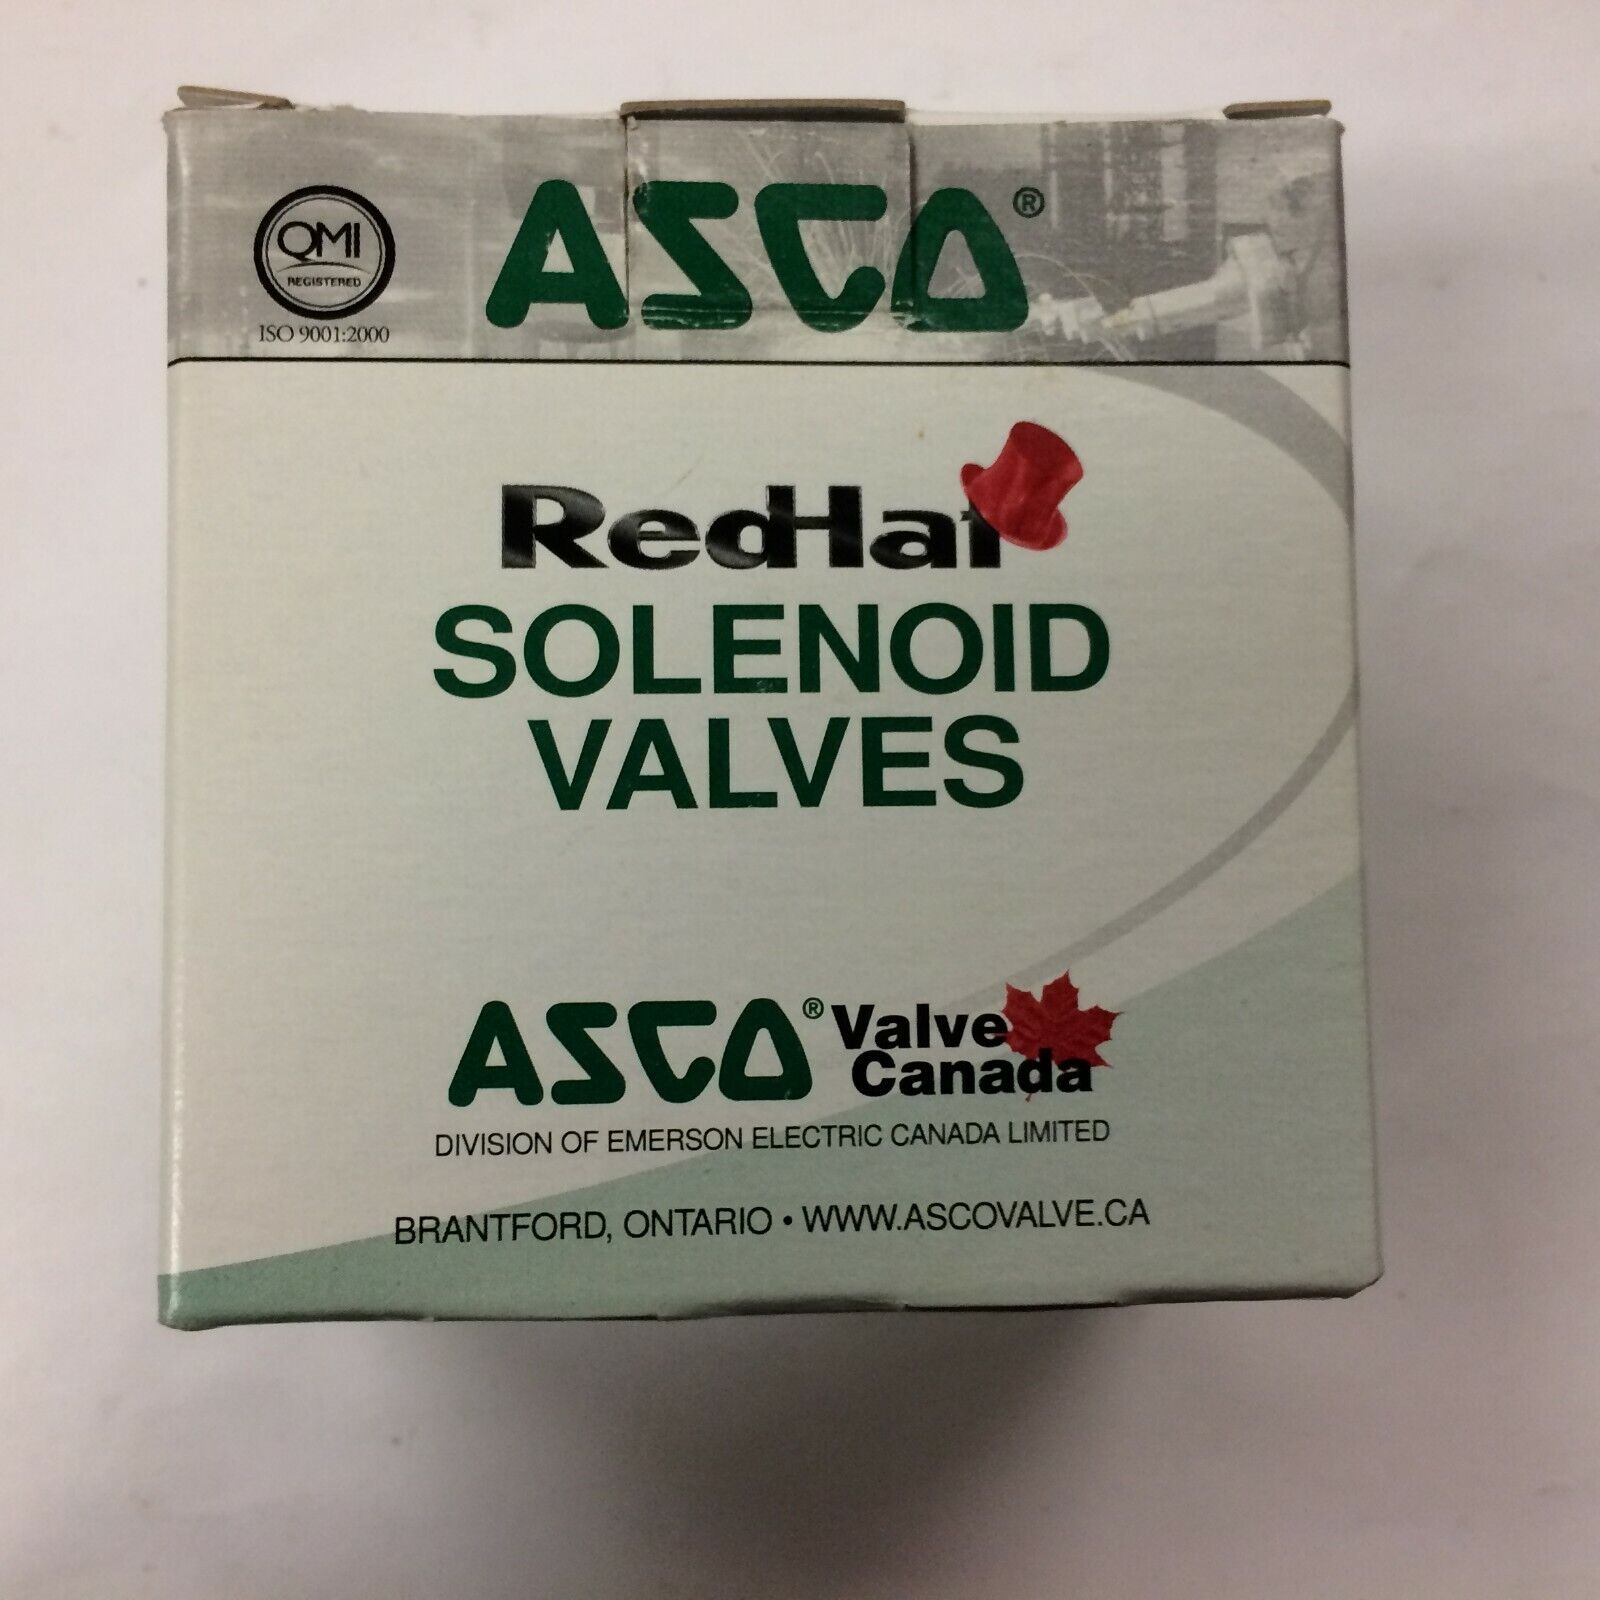 Asco Red Hat P117955-193 Solenoid Valve Repair Kit 302327-E NEW IN BOX!